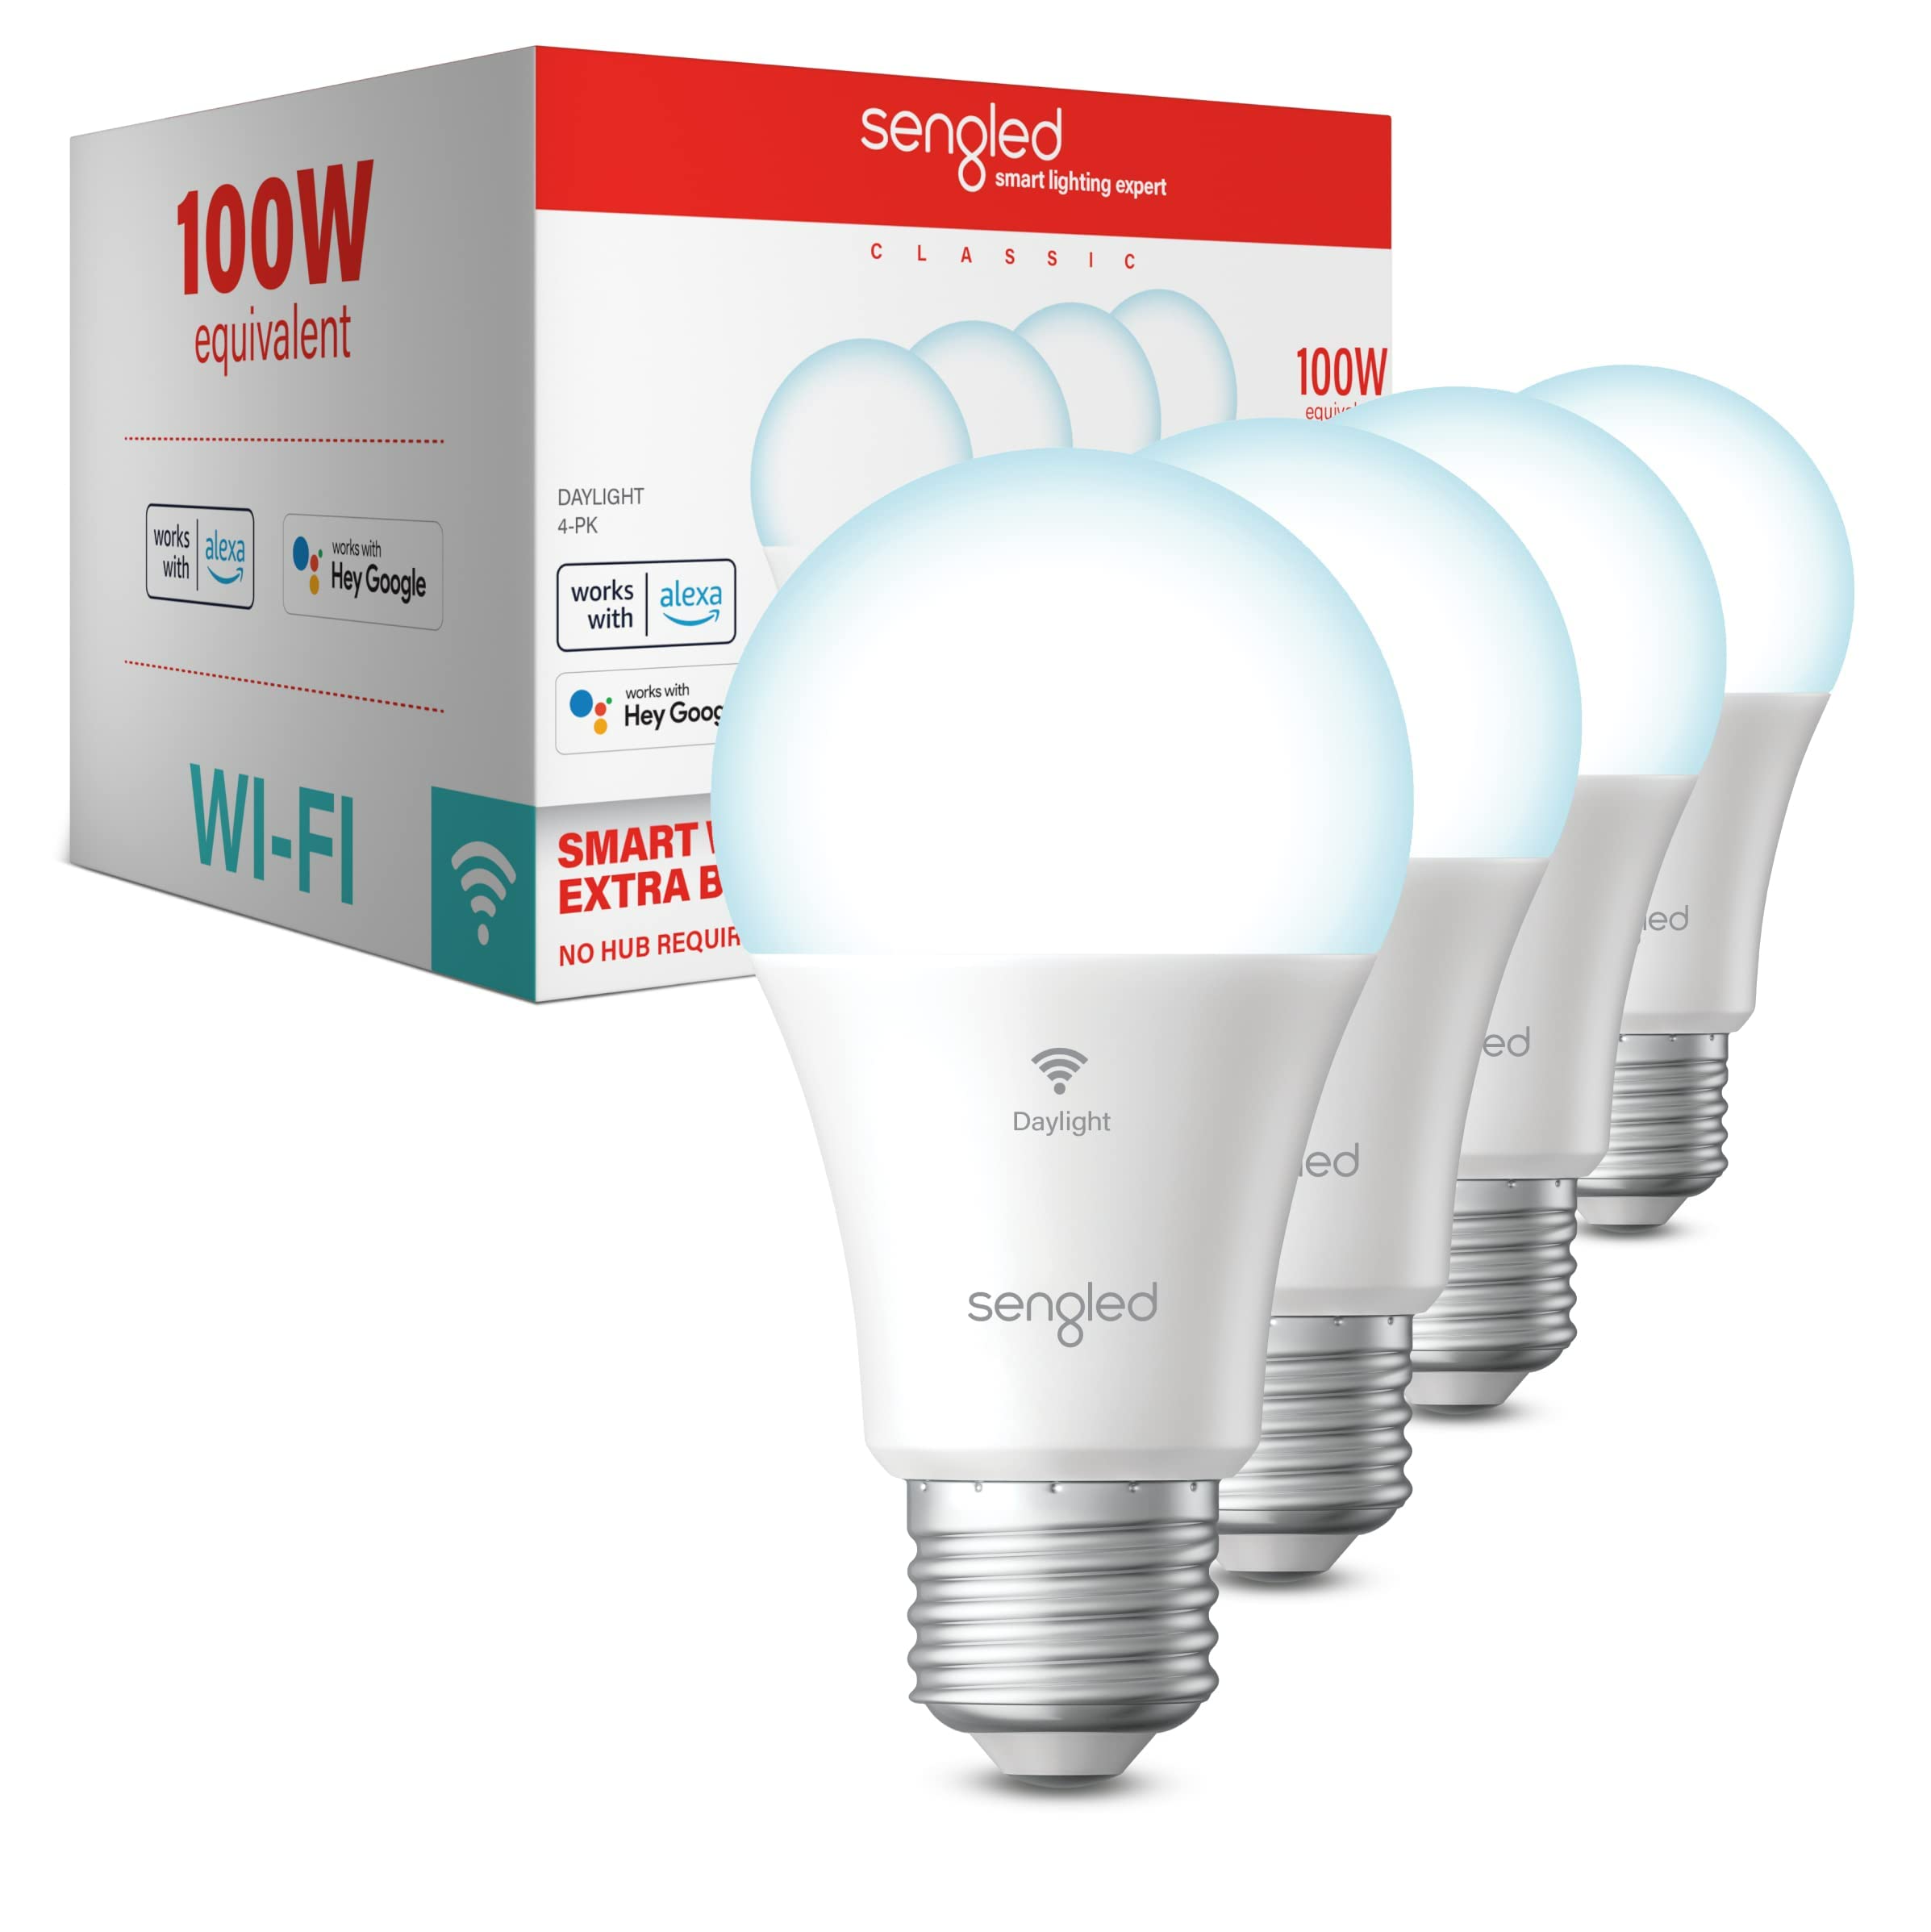 Sengled Smart Light Bulbs, 100W Equivalent WiFi Light Bulb, 1500LM High Brightness Smart Bulbs That Work with Alexa Google, Dimmable A19 Daylight 5000K Alexa Light Bulb, CRI90, No Hub Required, 4Pack